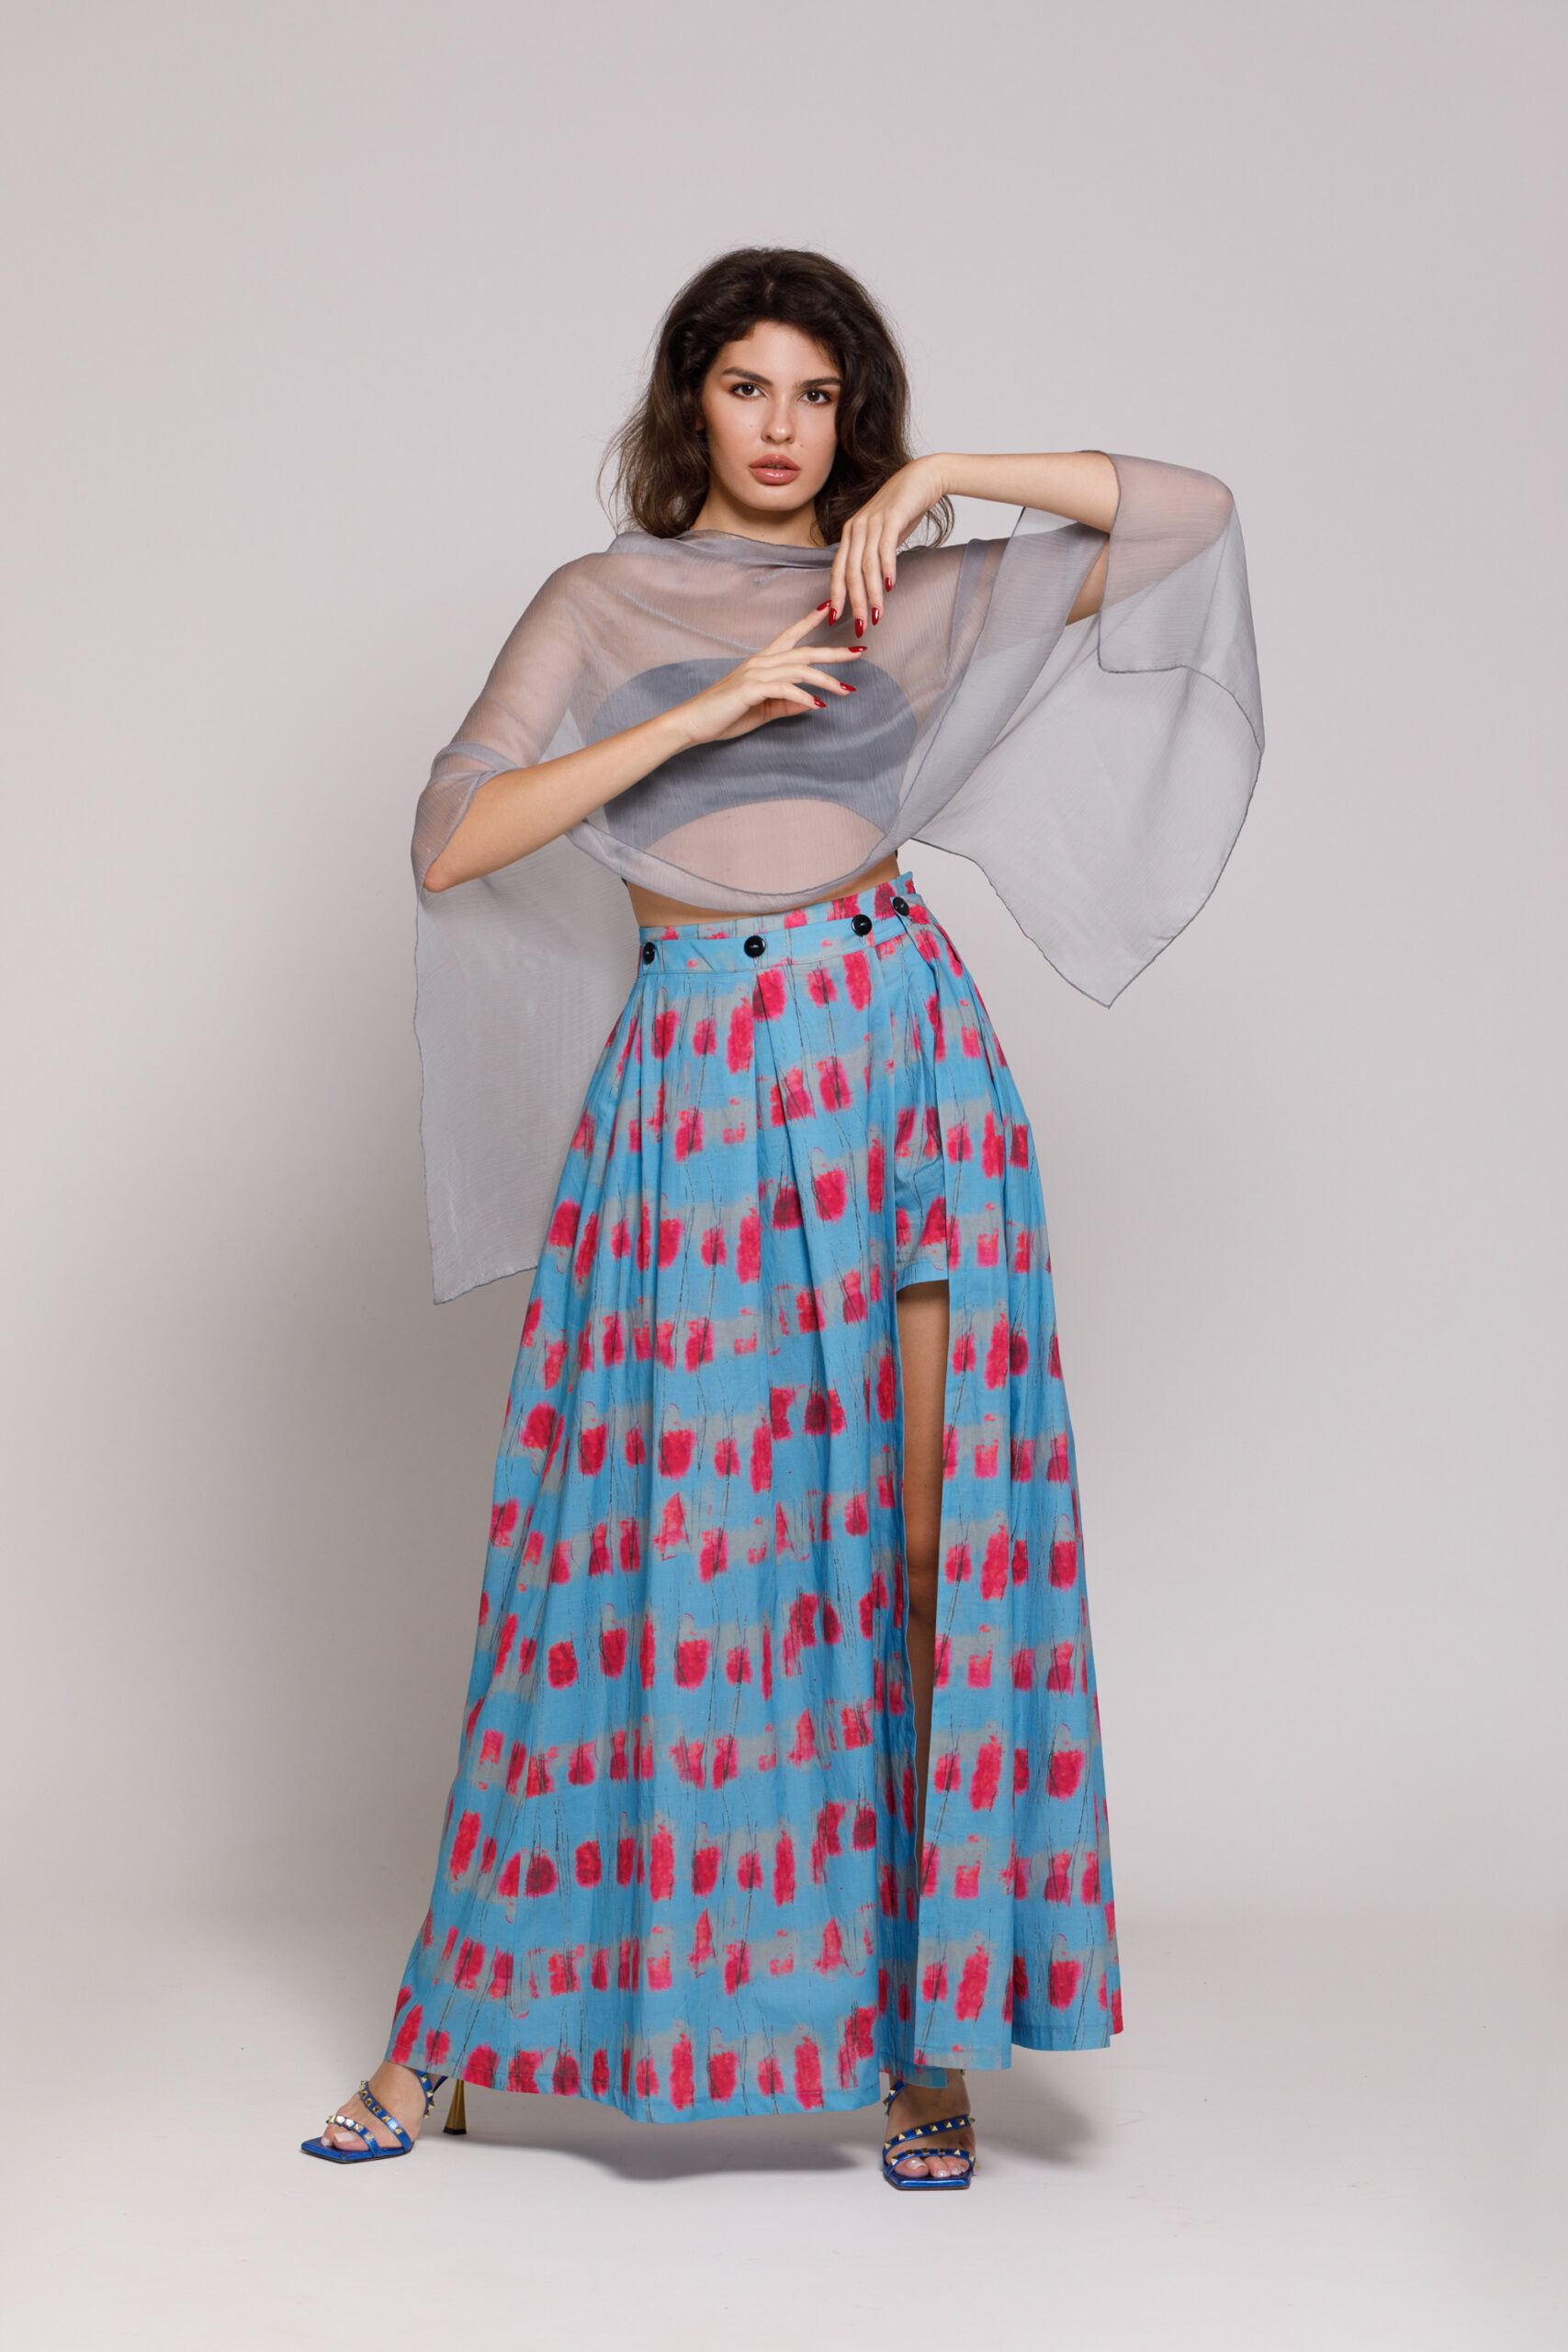 AMENA casual skirt with printed poplin shorts. Natural fabrics, original design, handmade embroidery